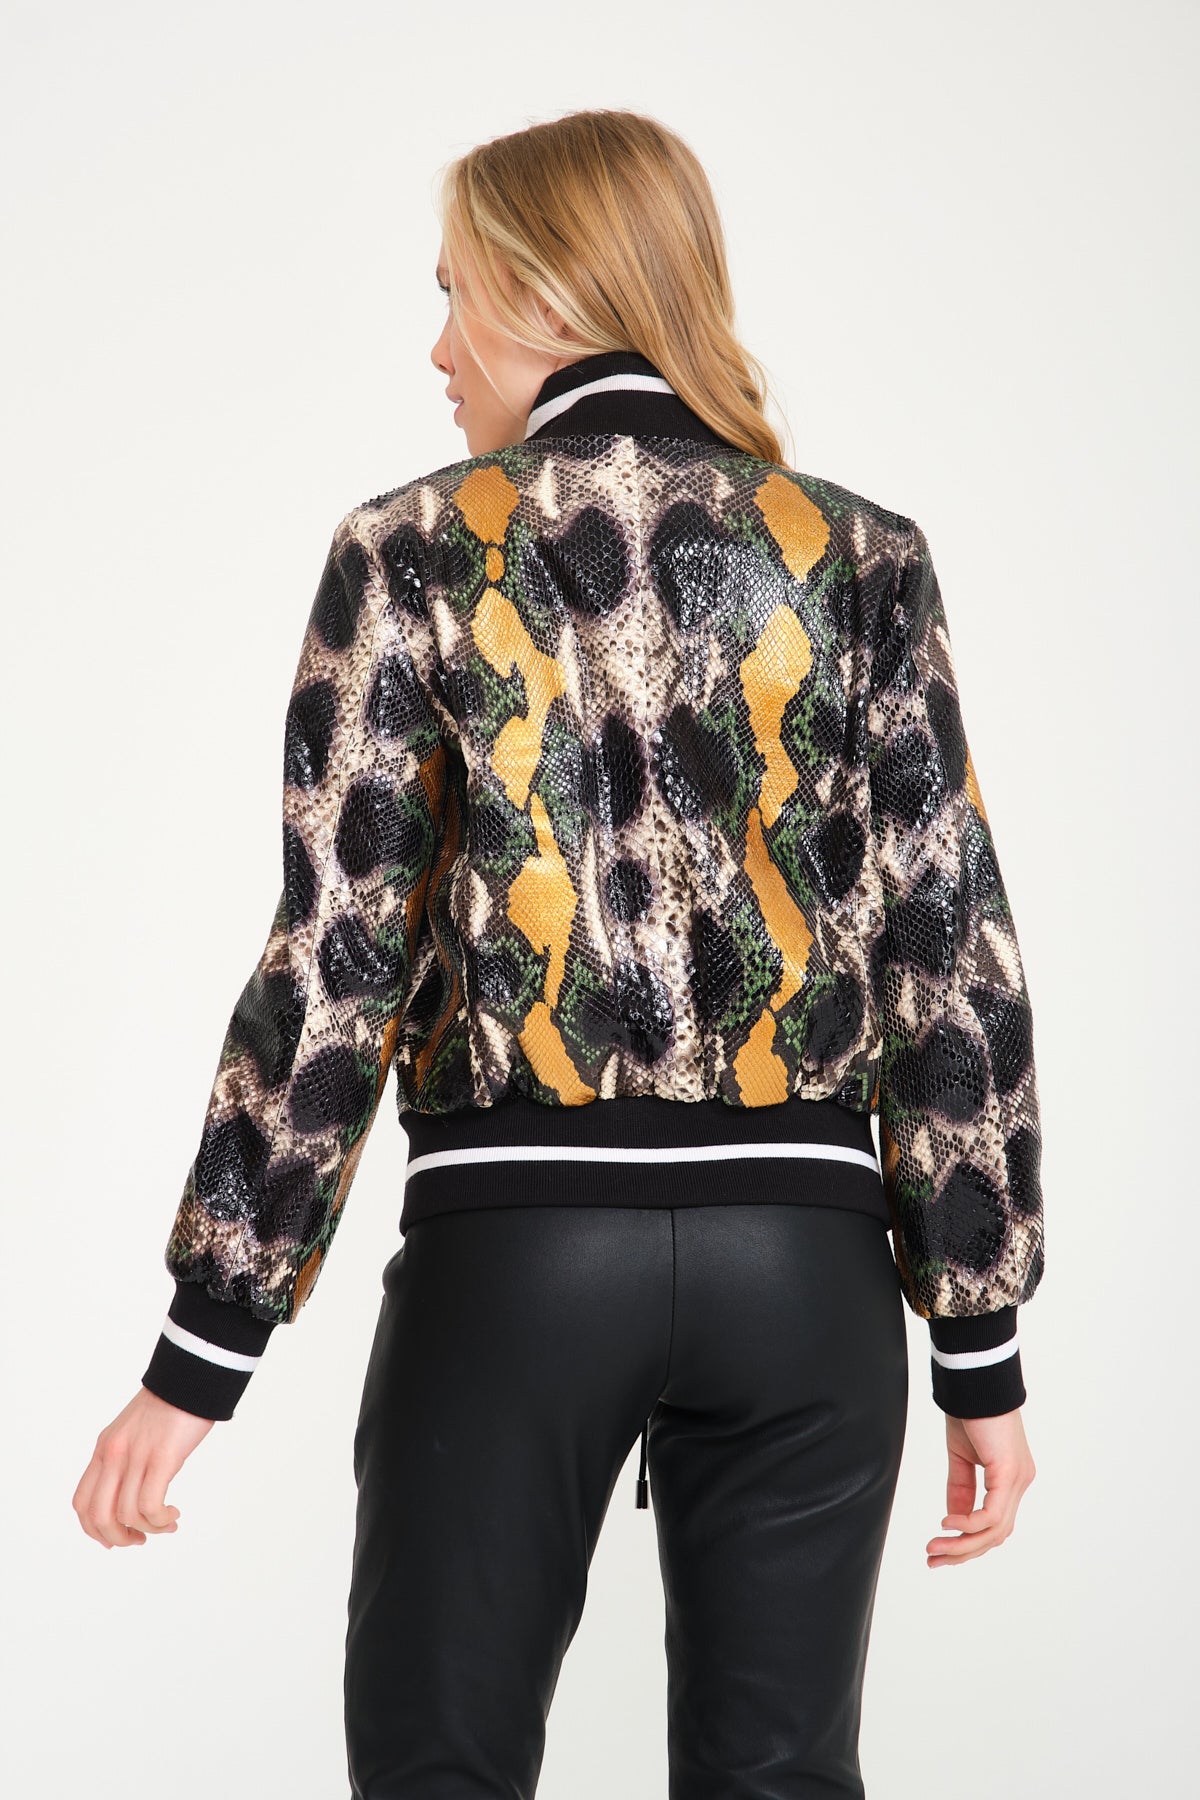 Multicolored Python Leather Jacket